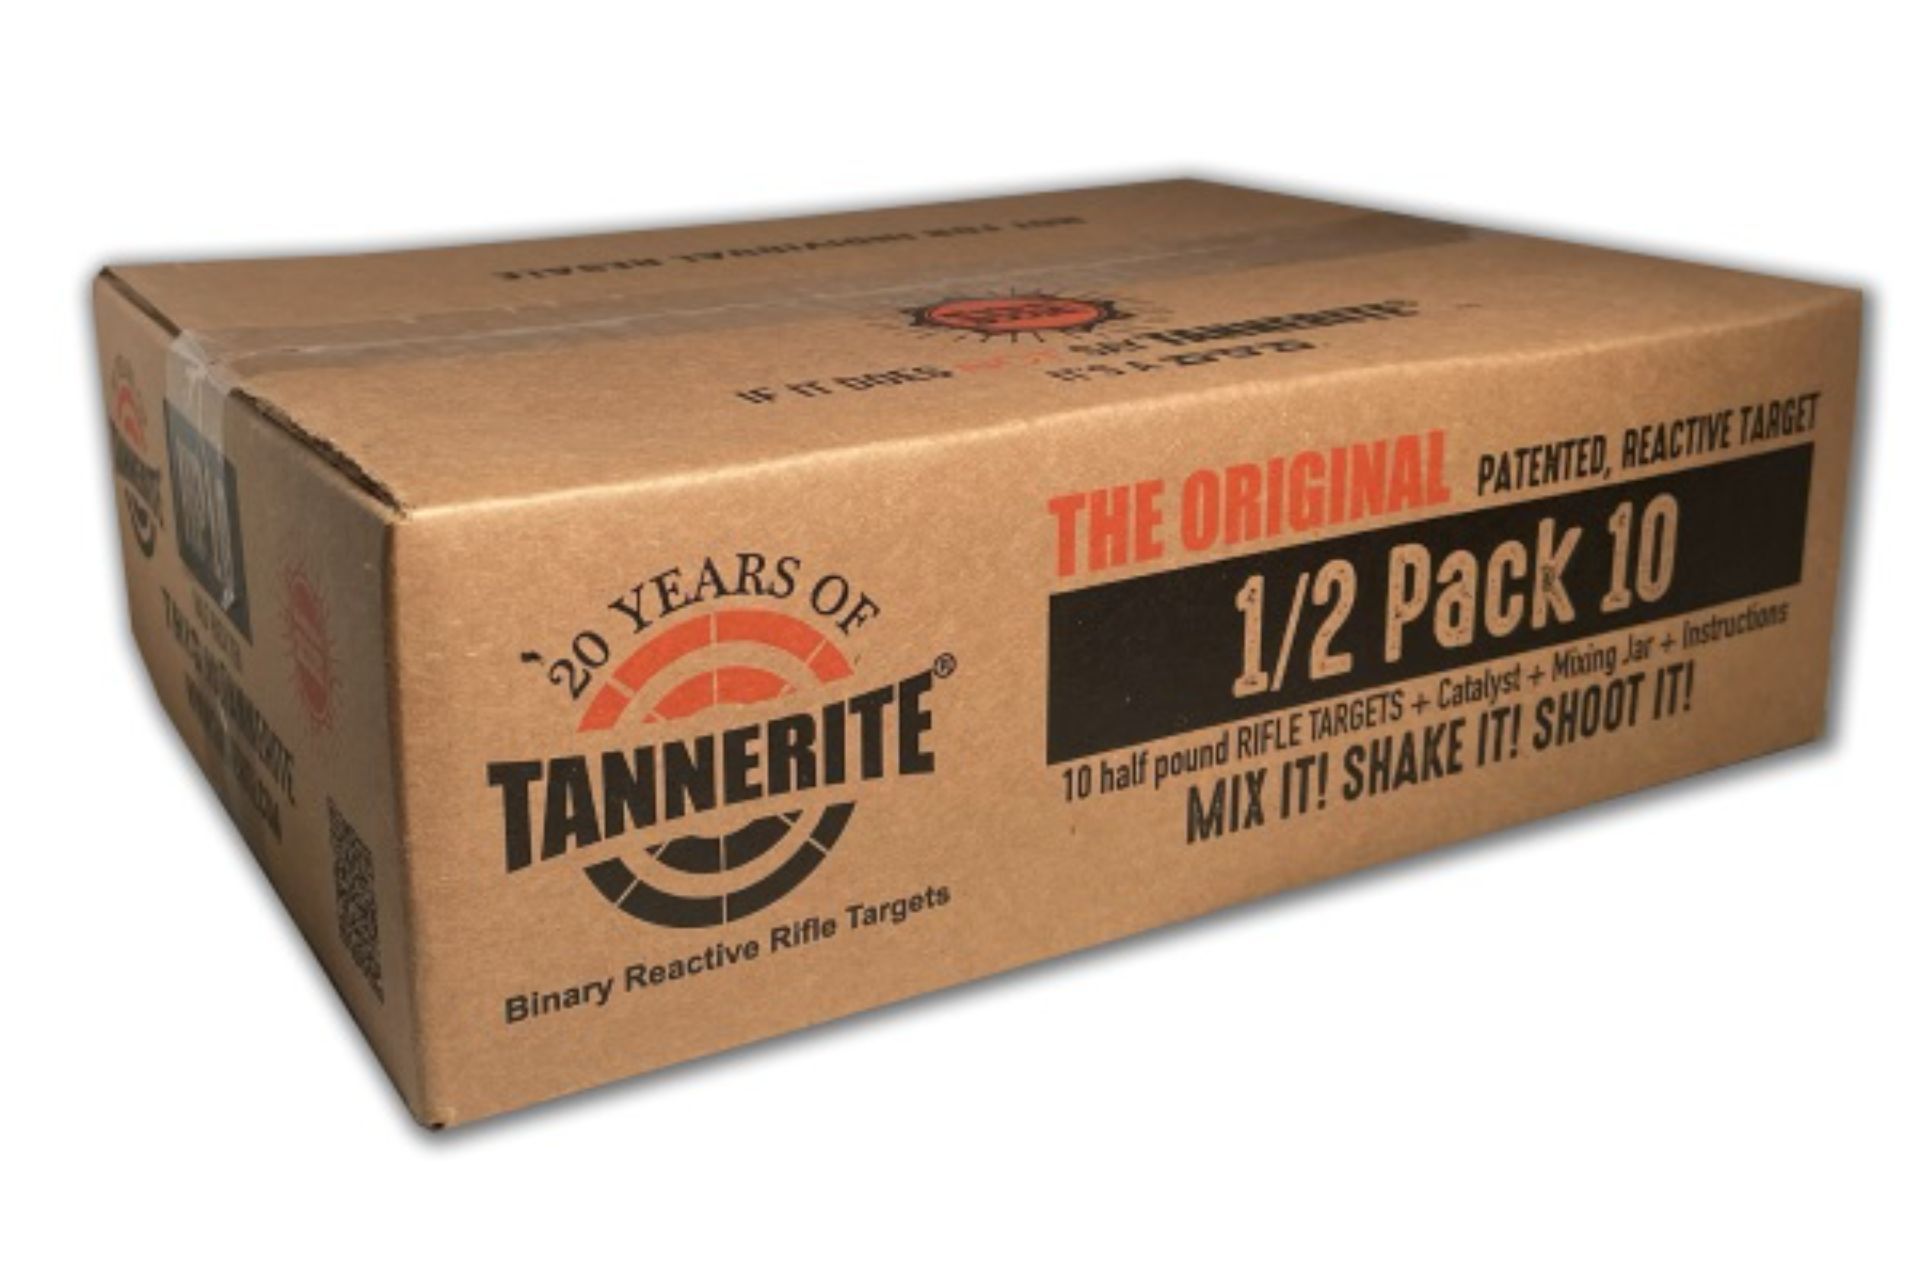 Tannerite 1/2 PACK 10 (10 -1/2LB TARGET)